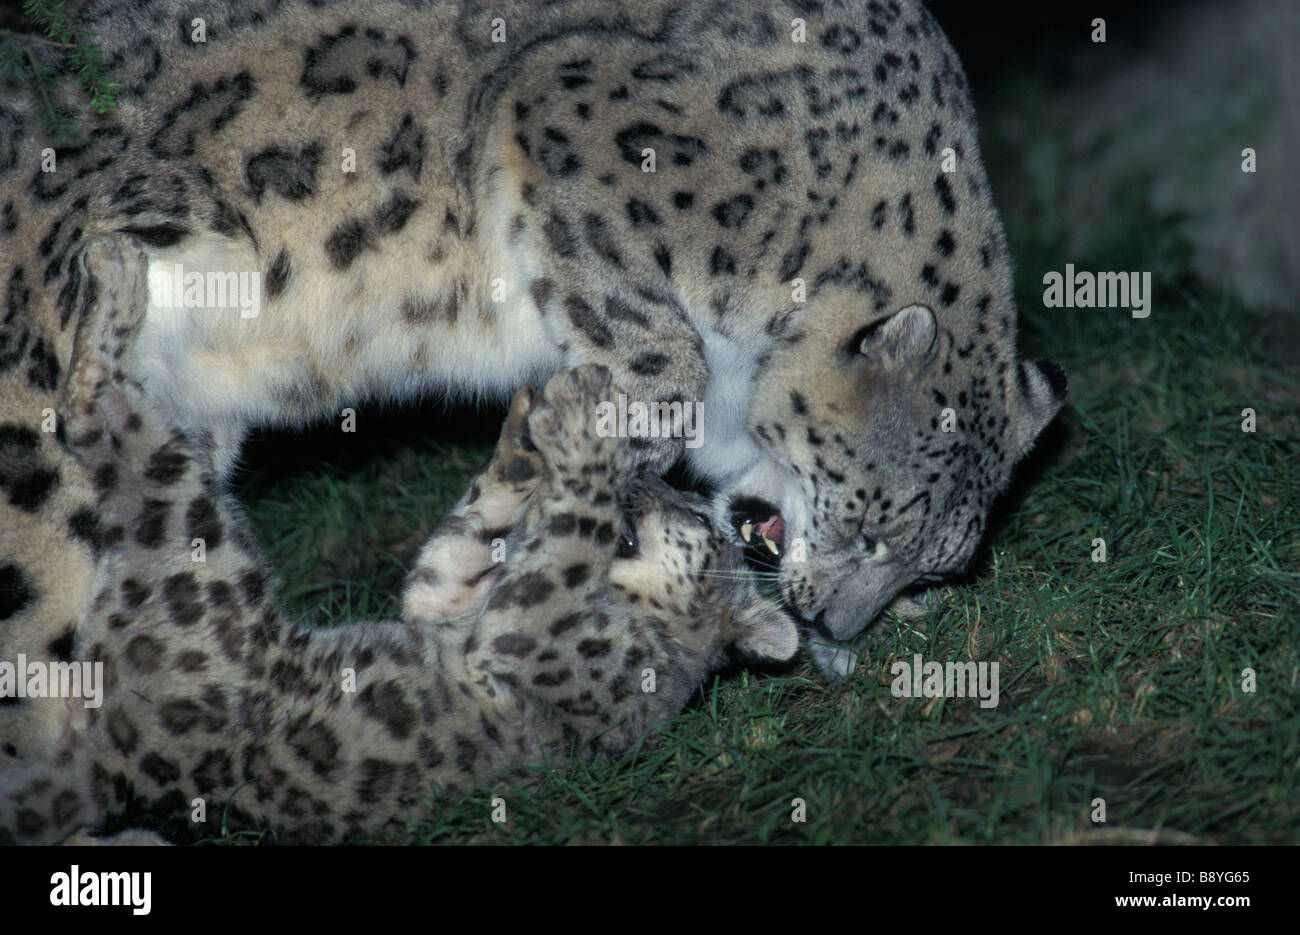 panthere des neiges schneeleopard Snow Leopard Panthera unica Unica unica affection animal Asia Asien big cat Carnivora carnivor Stock Photo